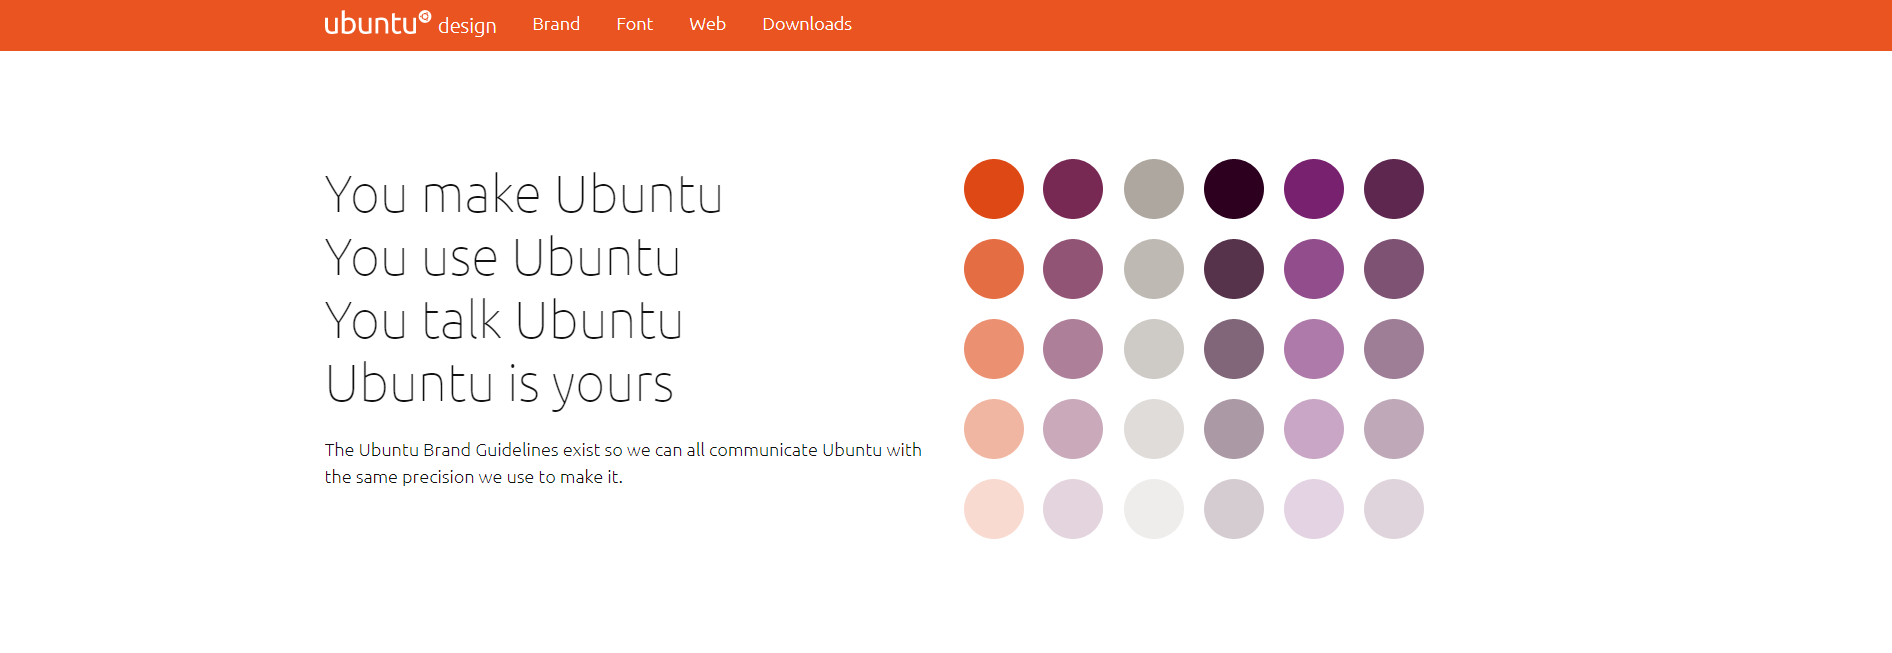 Ubuntu's Brand Guide